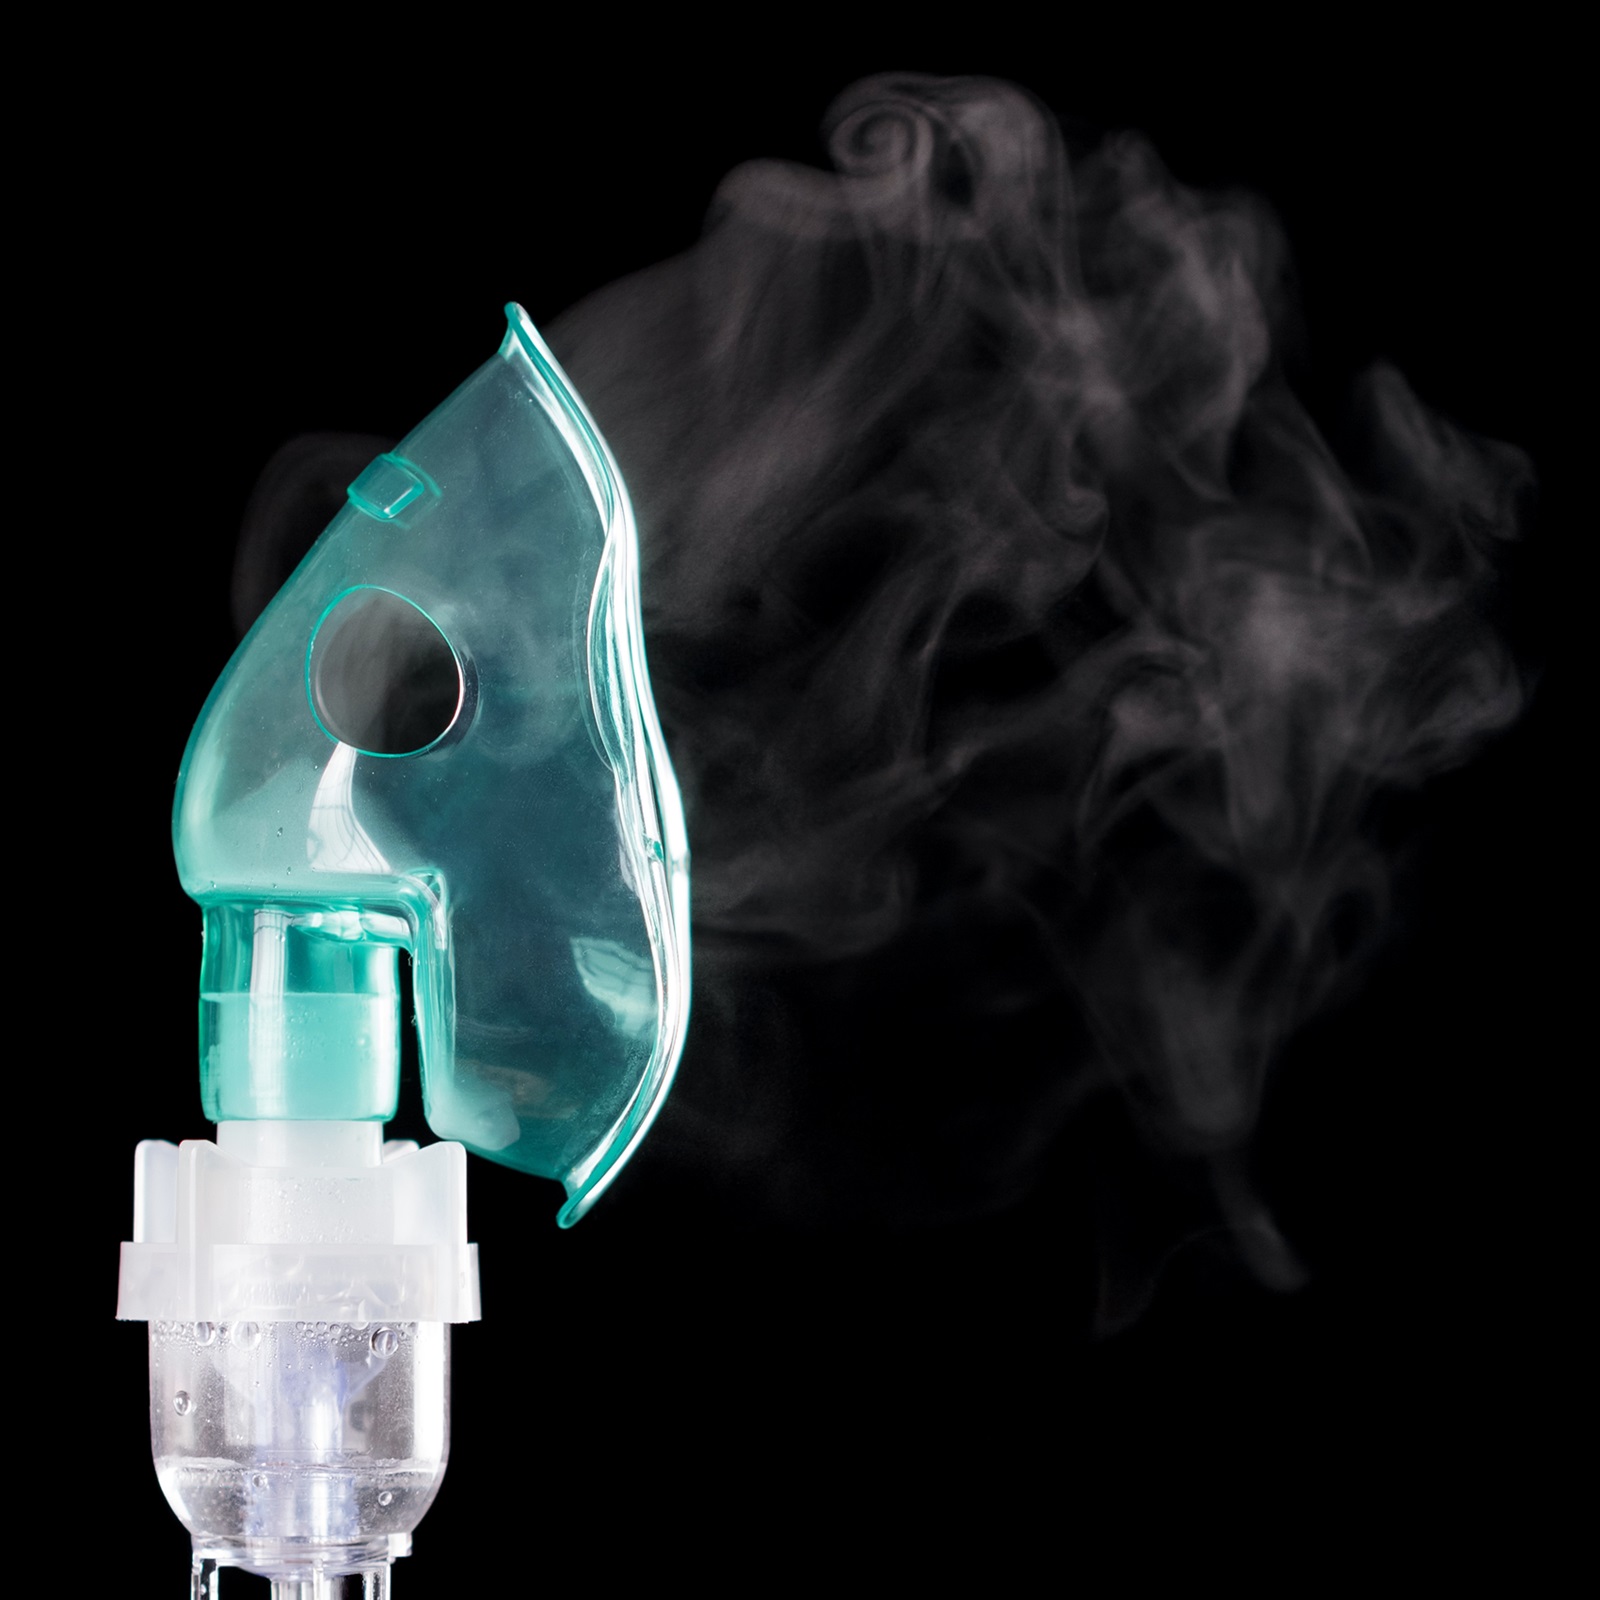 intubating asthmatics